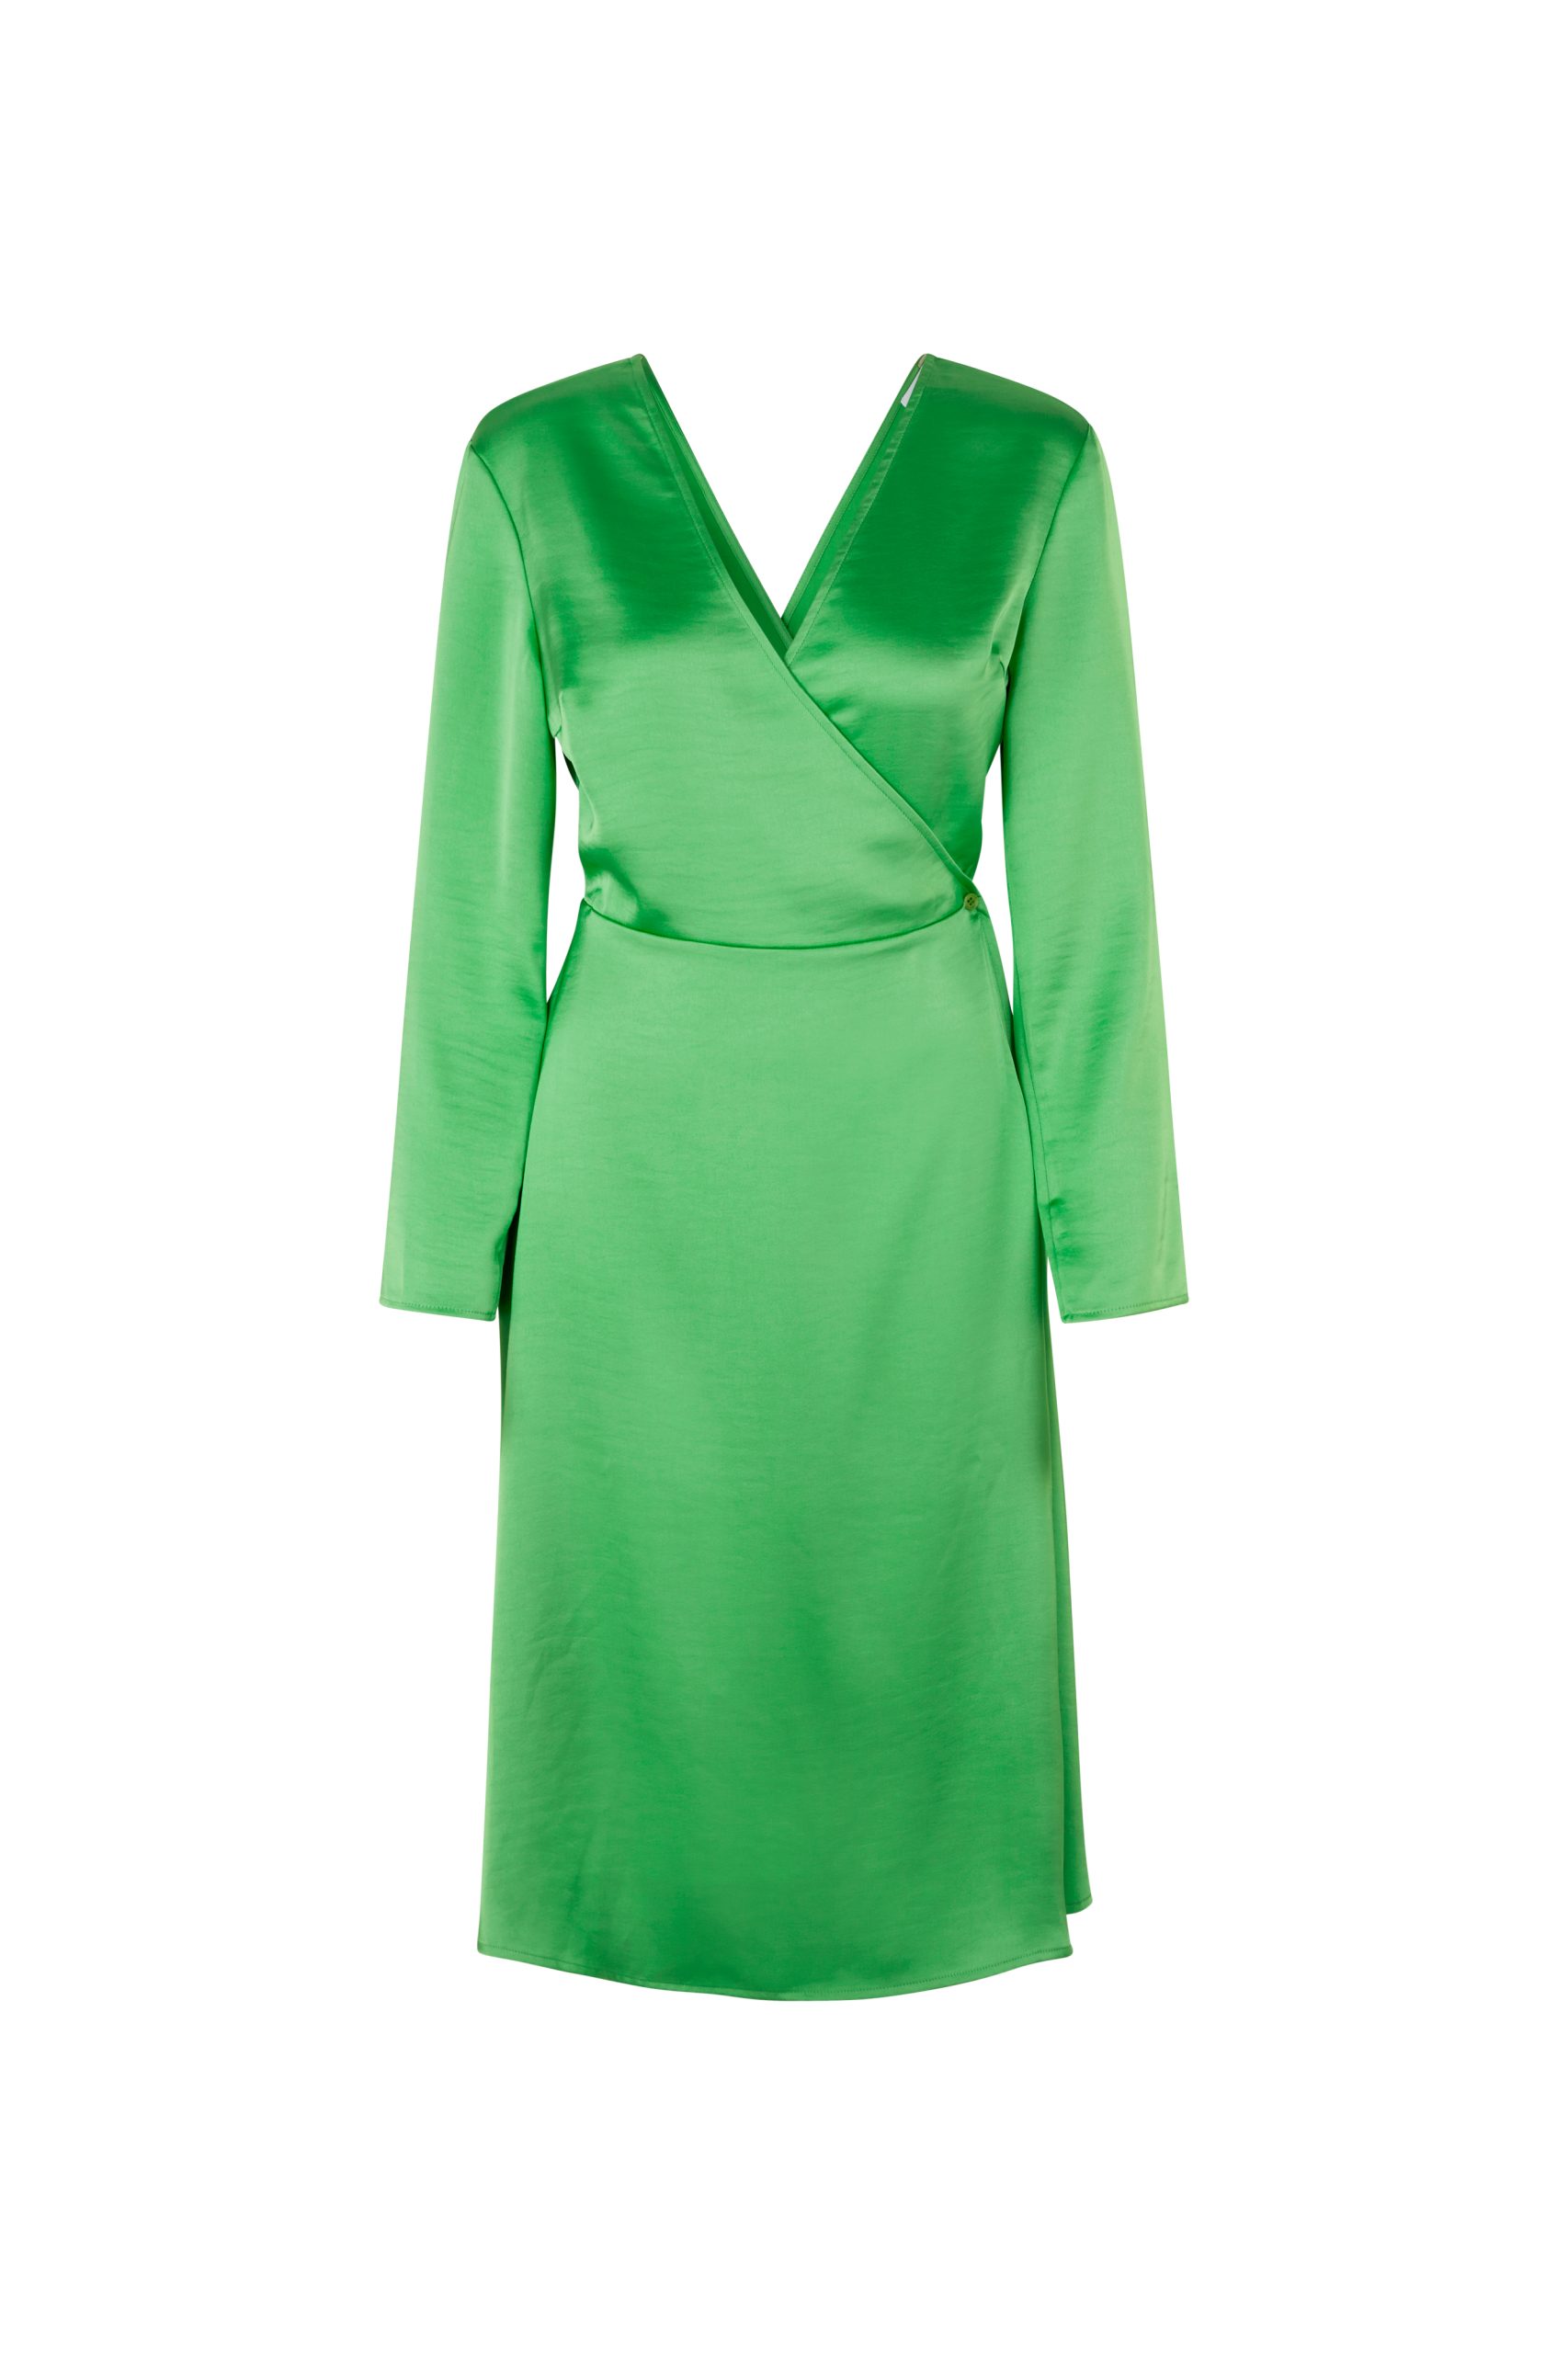 Adela dress 12956 VIBRANT GREEN 1 scaled